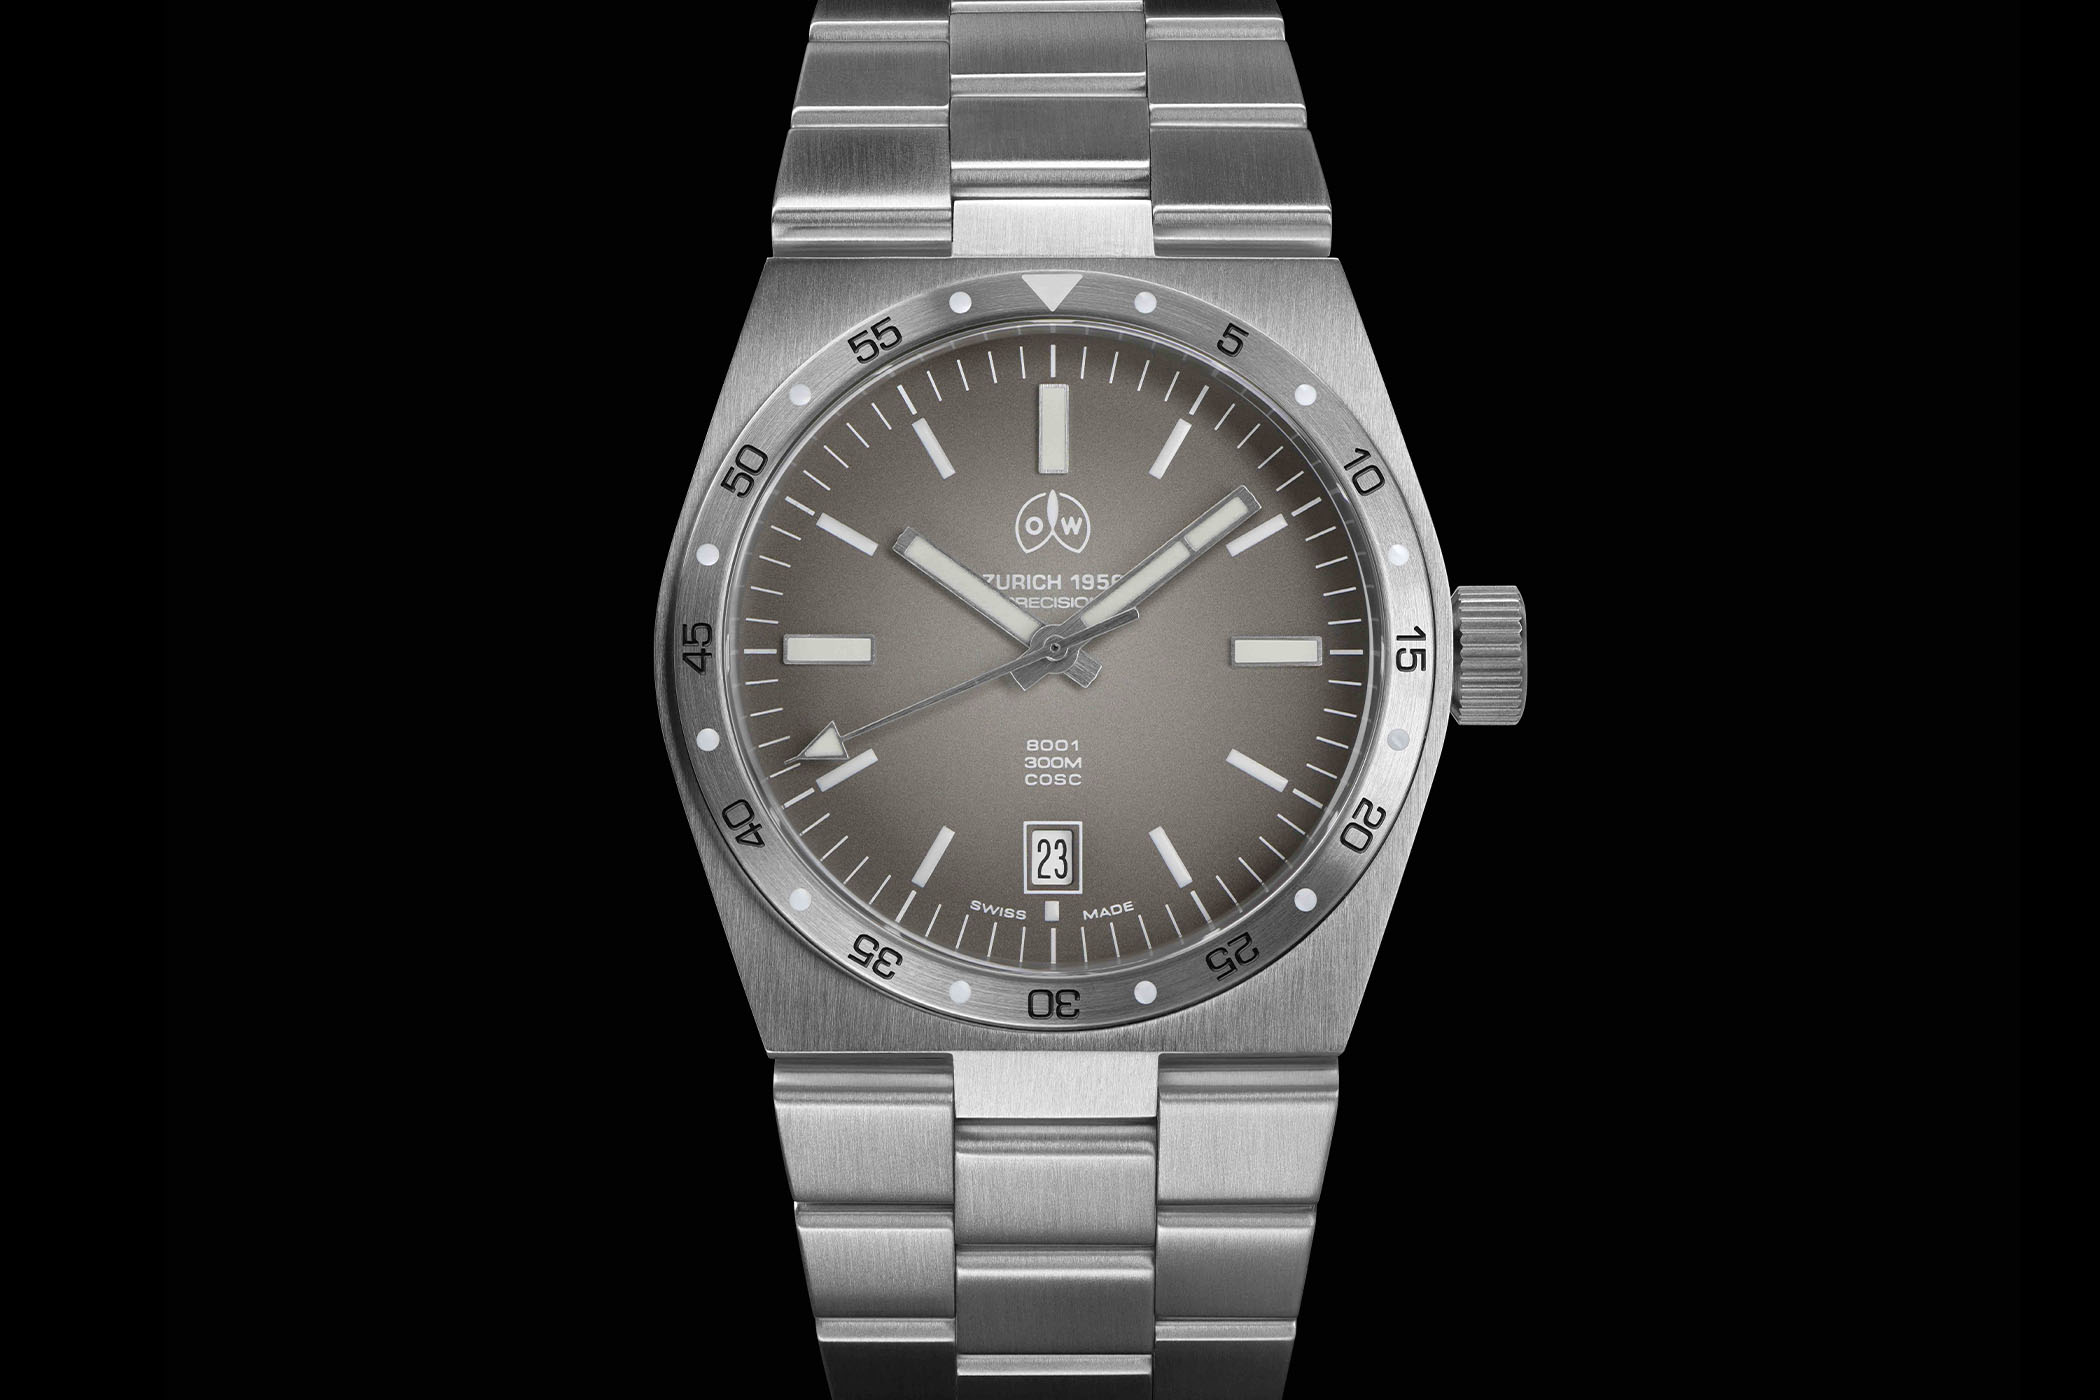 monochrome-watches.com